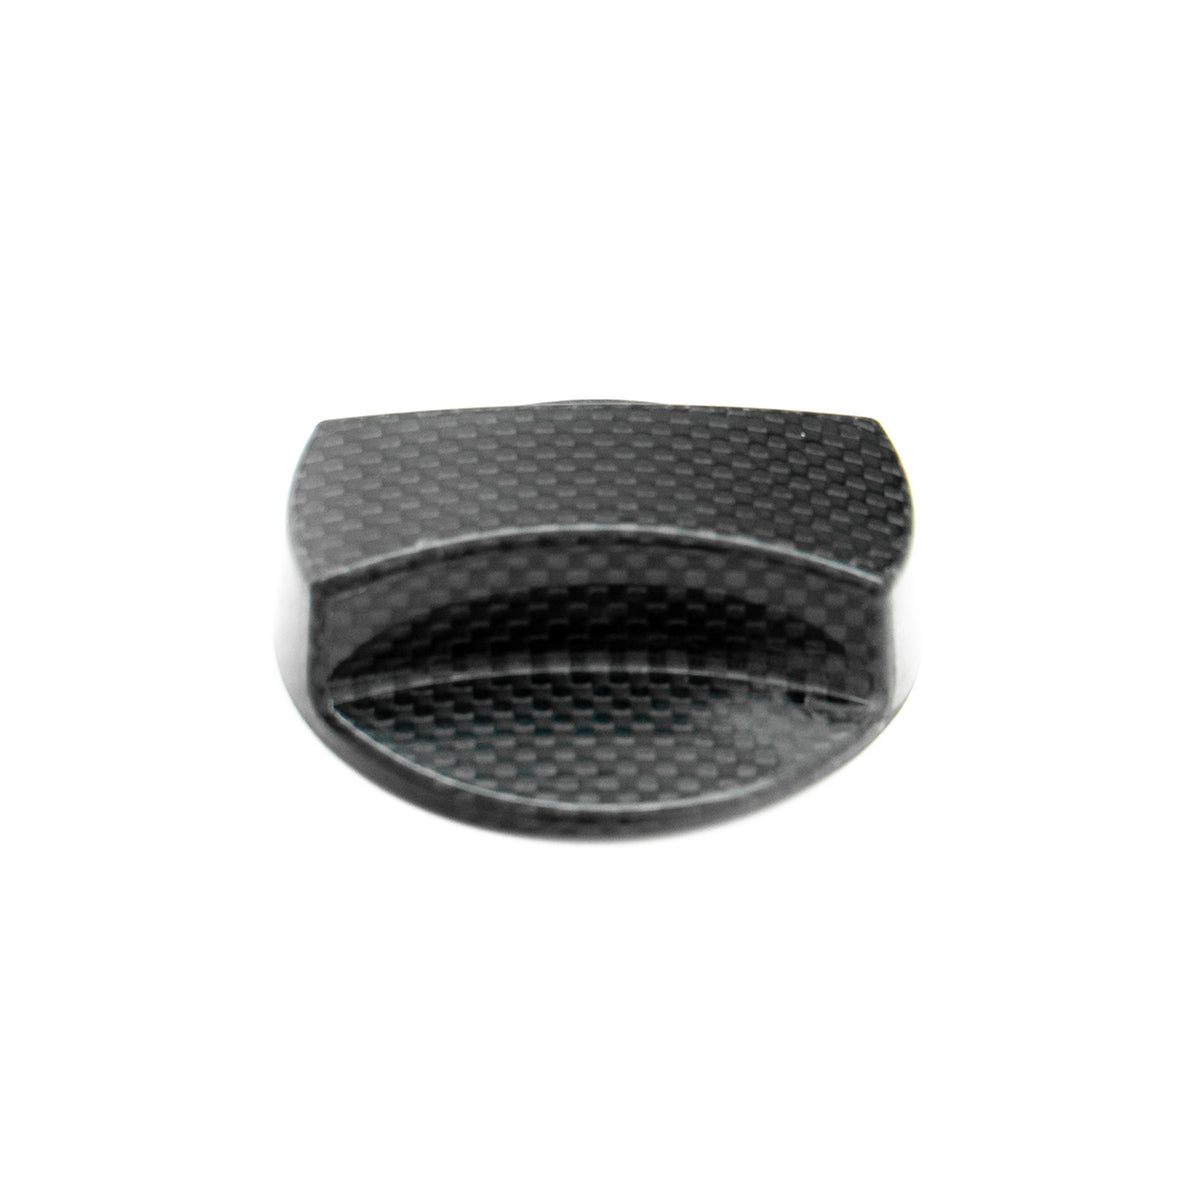 MHC+ BMW Fuel Filler Cap Cover In 1x1 Weave Pre Preg Carbon Fibre